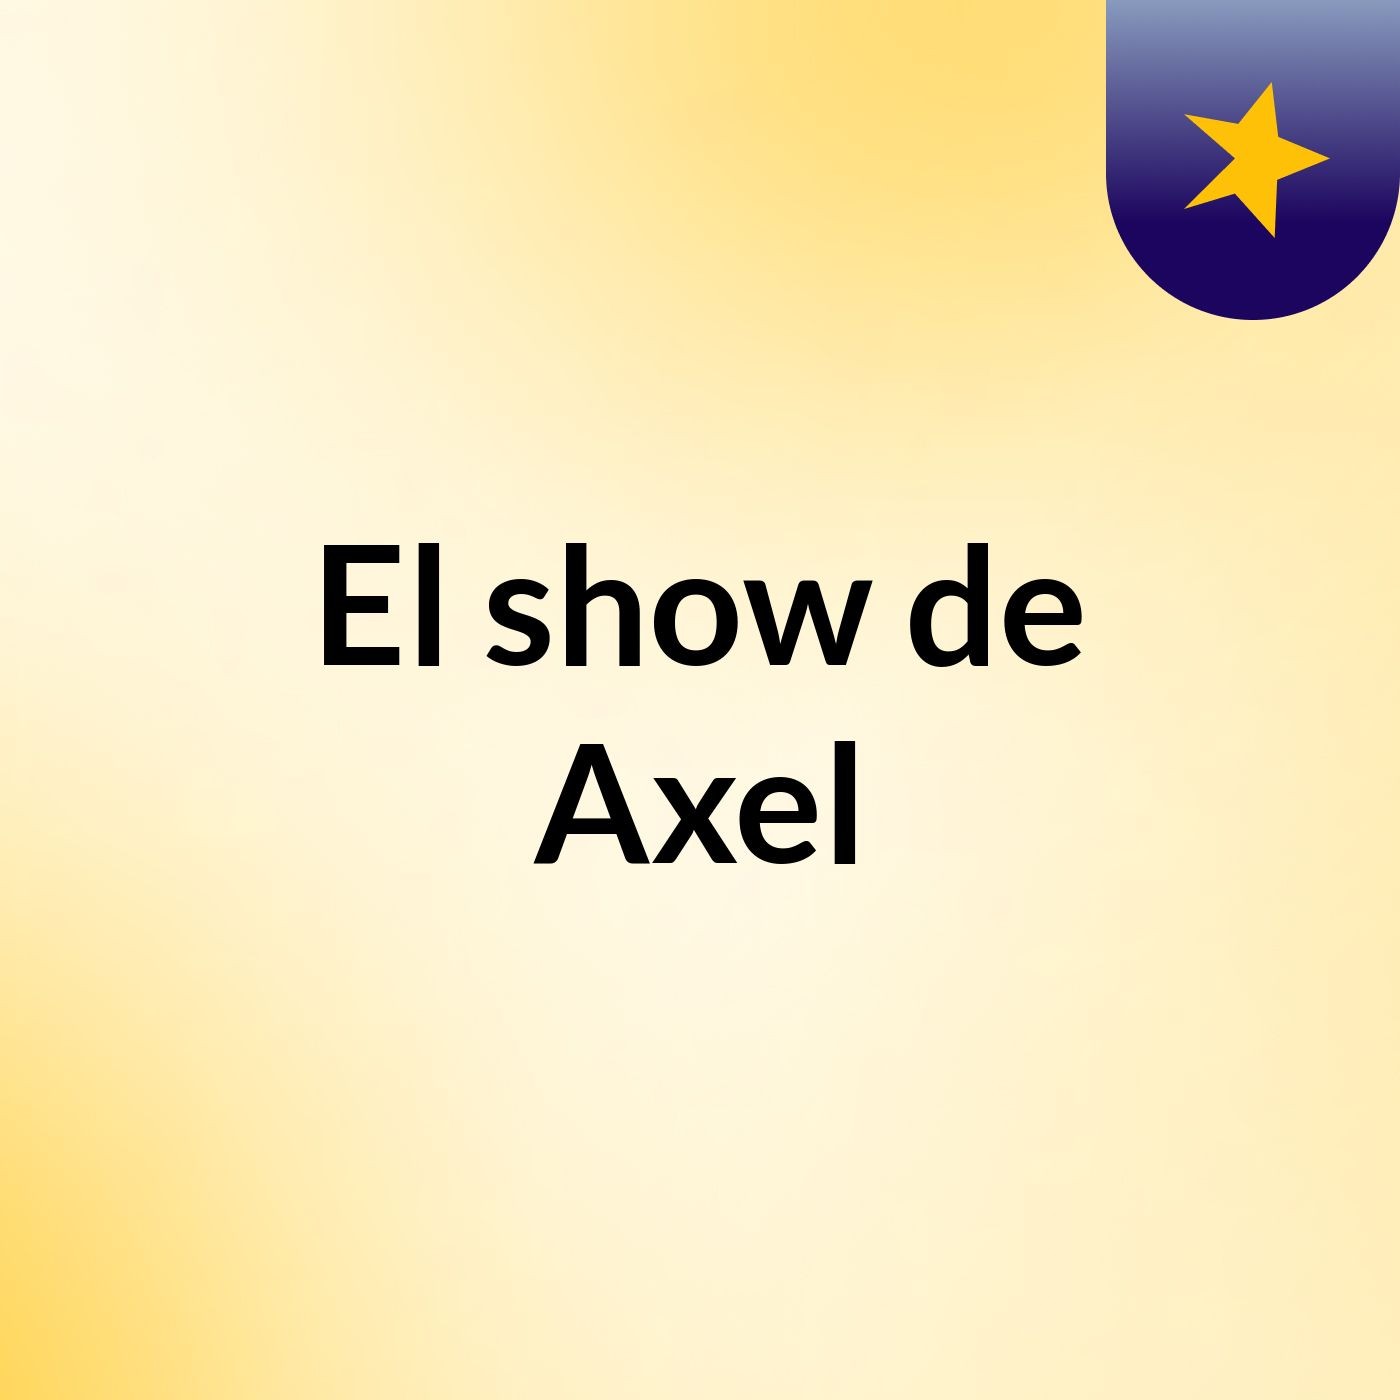 El show de Axel